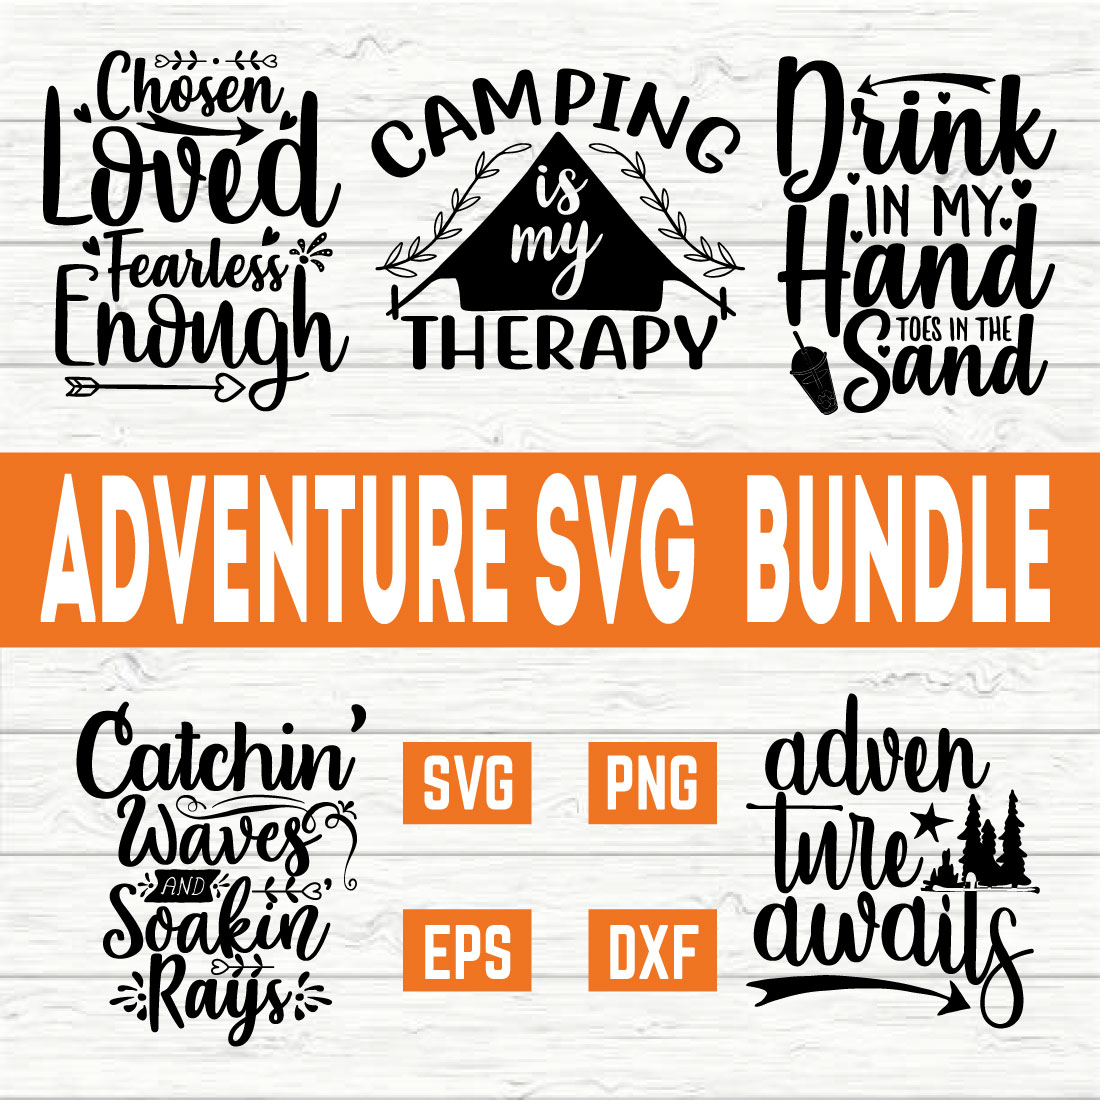 Adventure Typography Bundle vol 9 cover image.